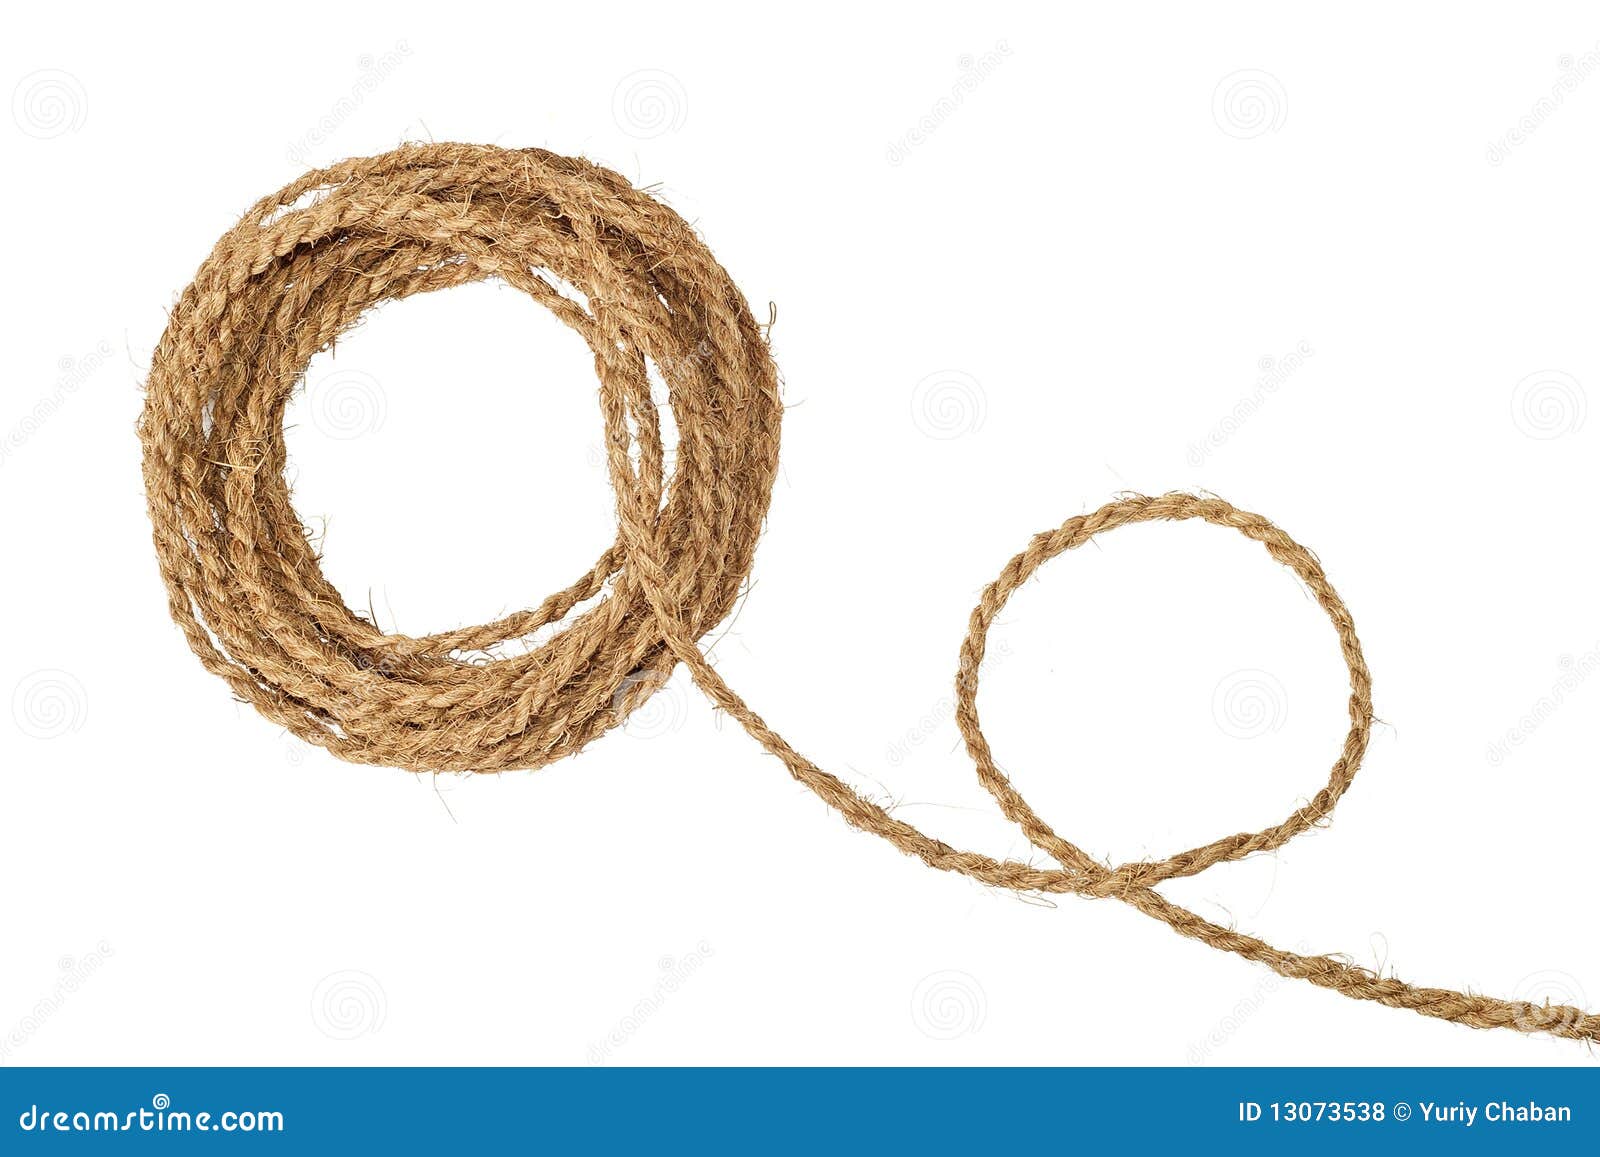 natural coarse fiber rope coil